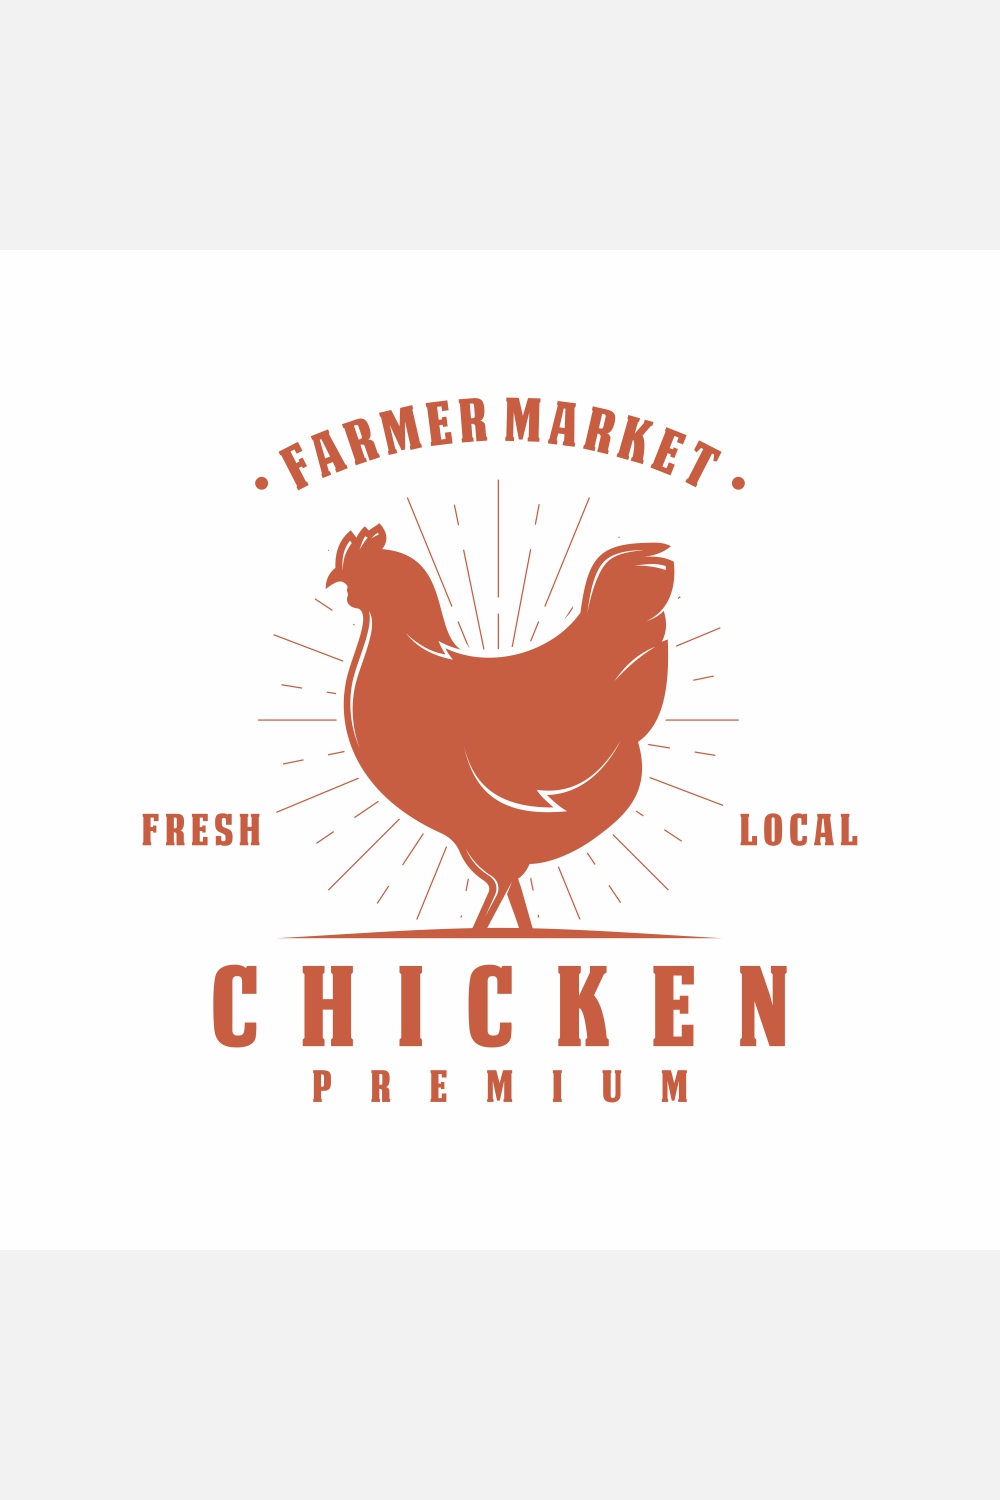 Chicken Farm logo design - only 5$ pinterest preview image.